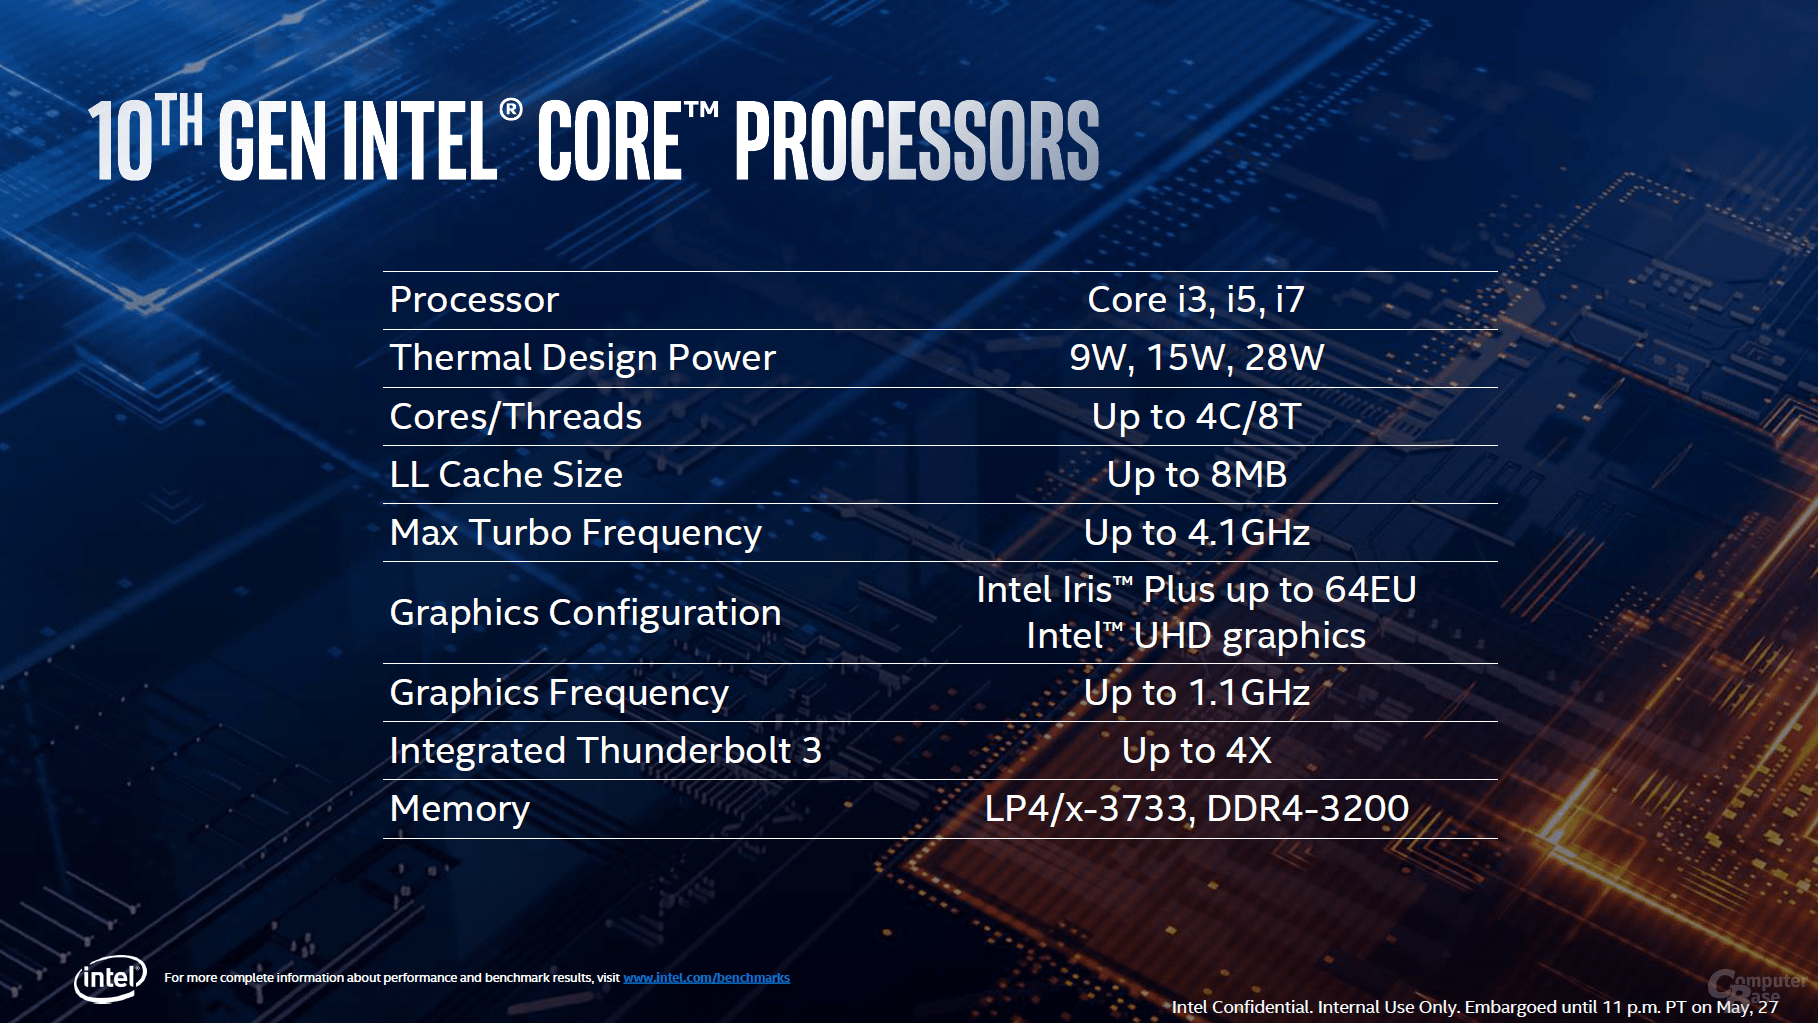 10th Gen Intel Core "class =" border-image